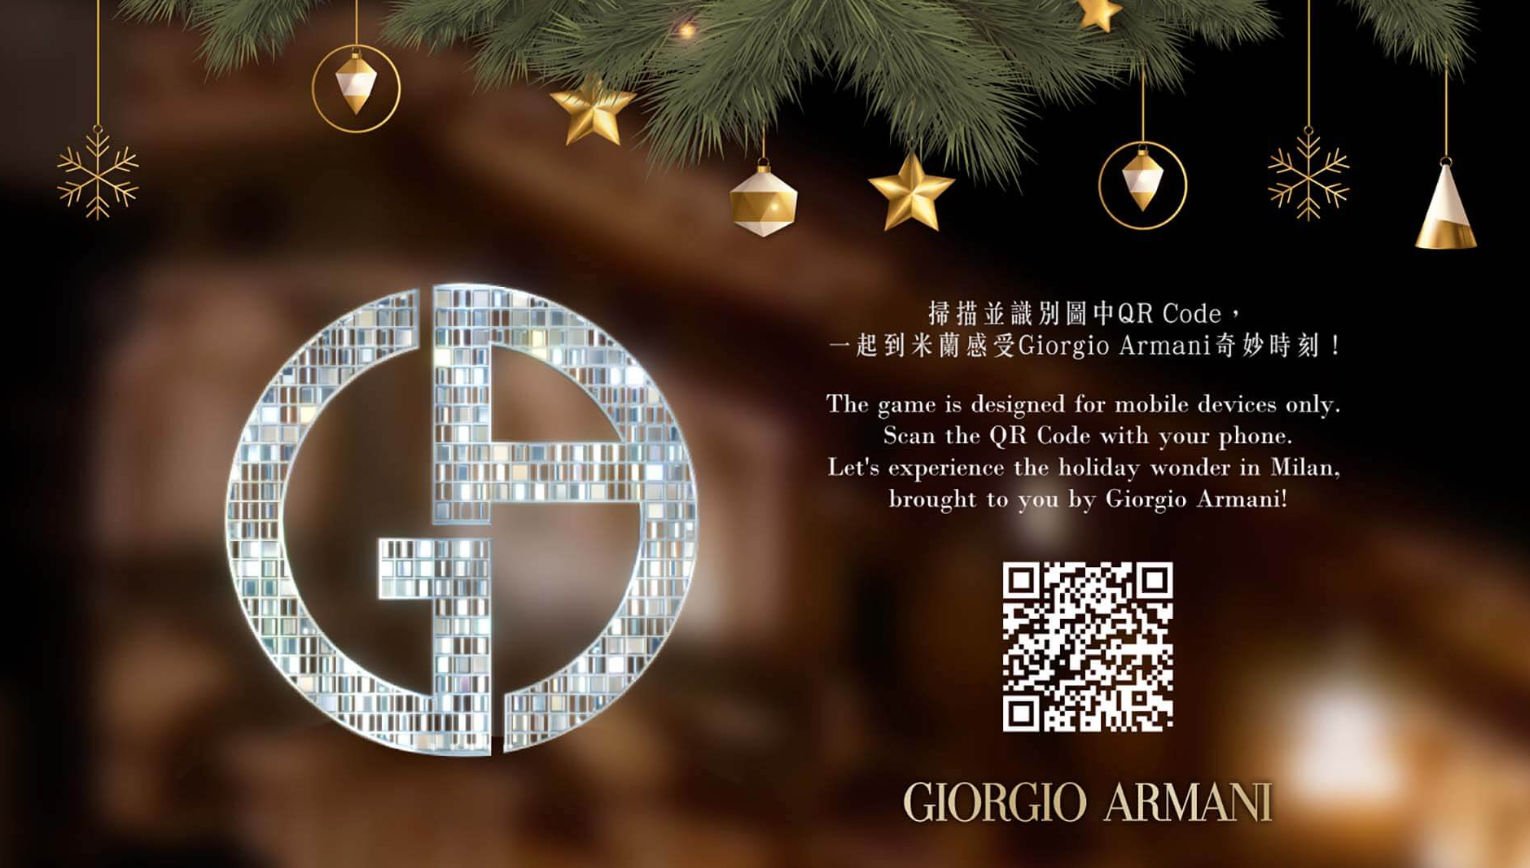 Giorgio Armani Launches Its Vacation Greetings Marketing campaign